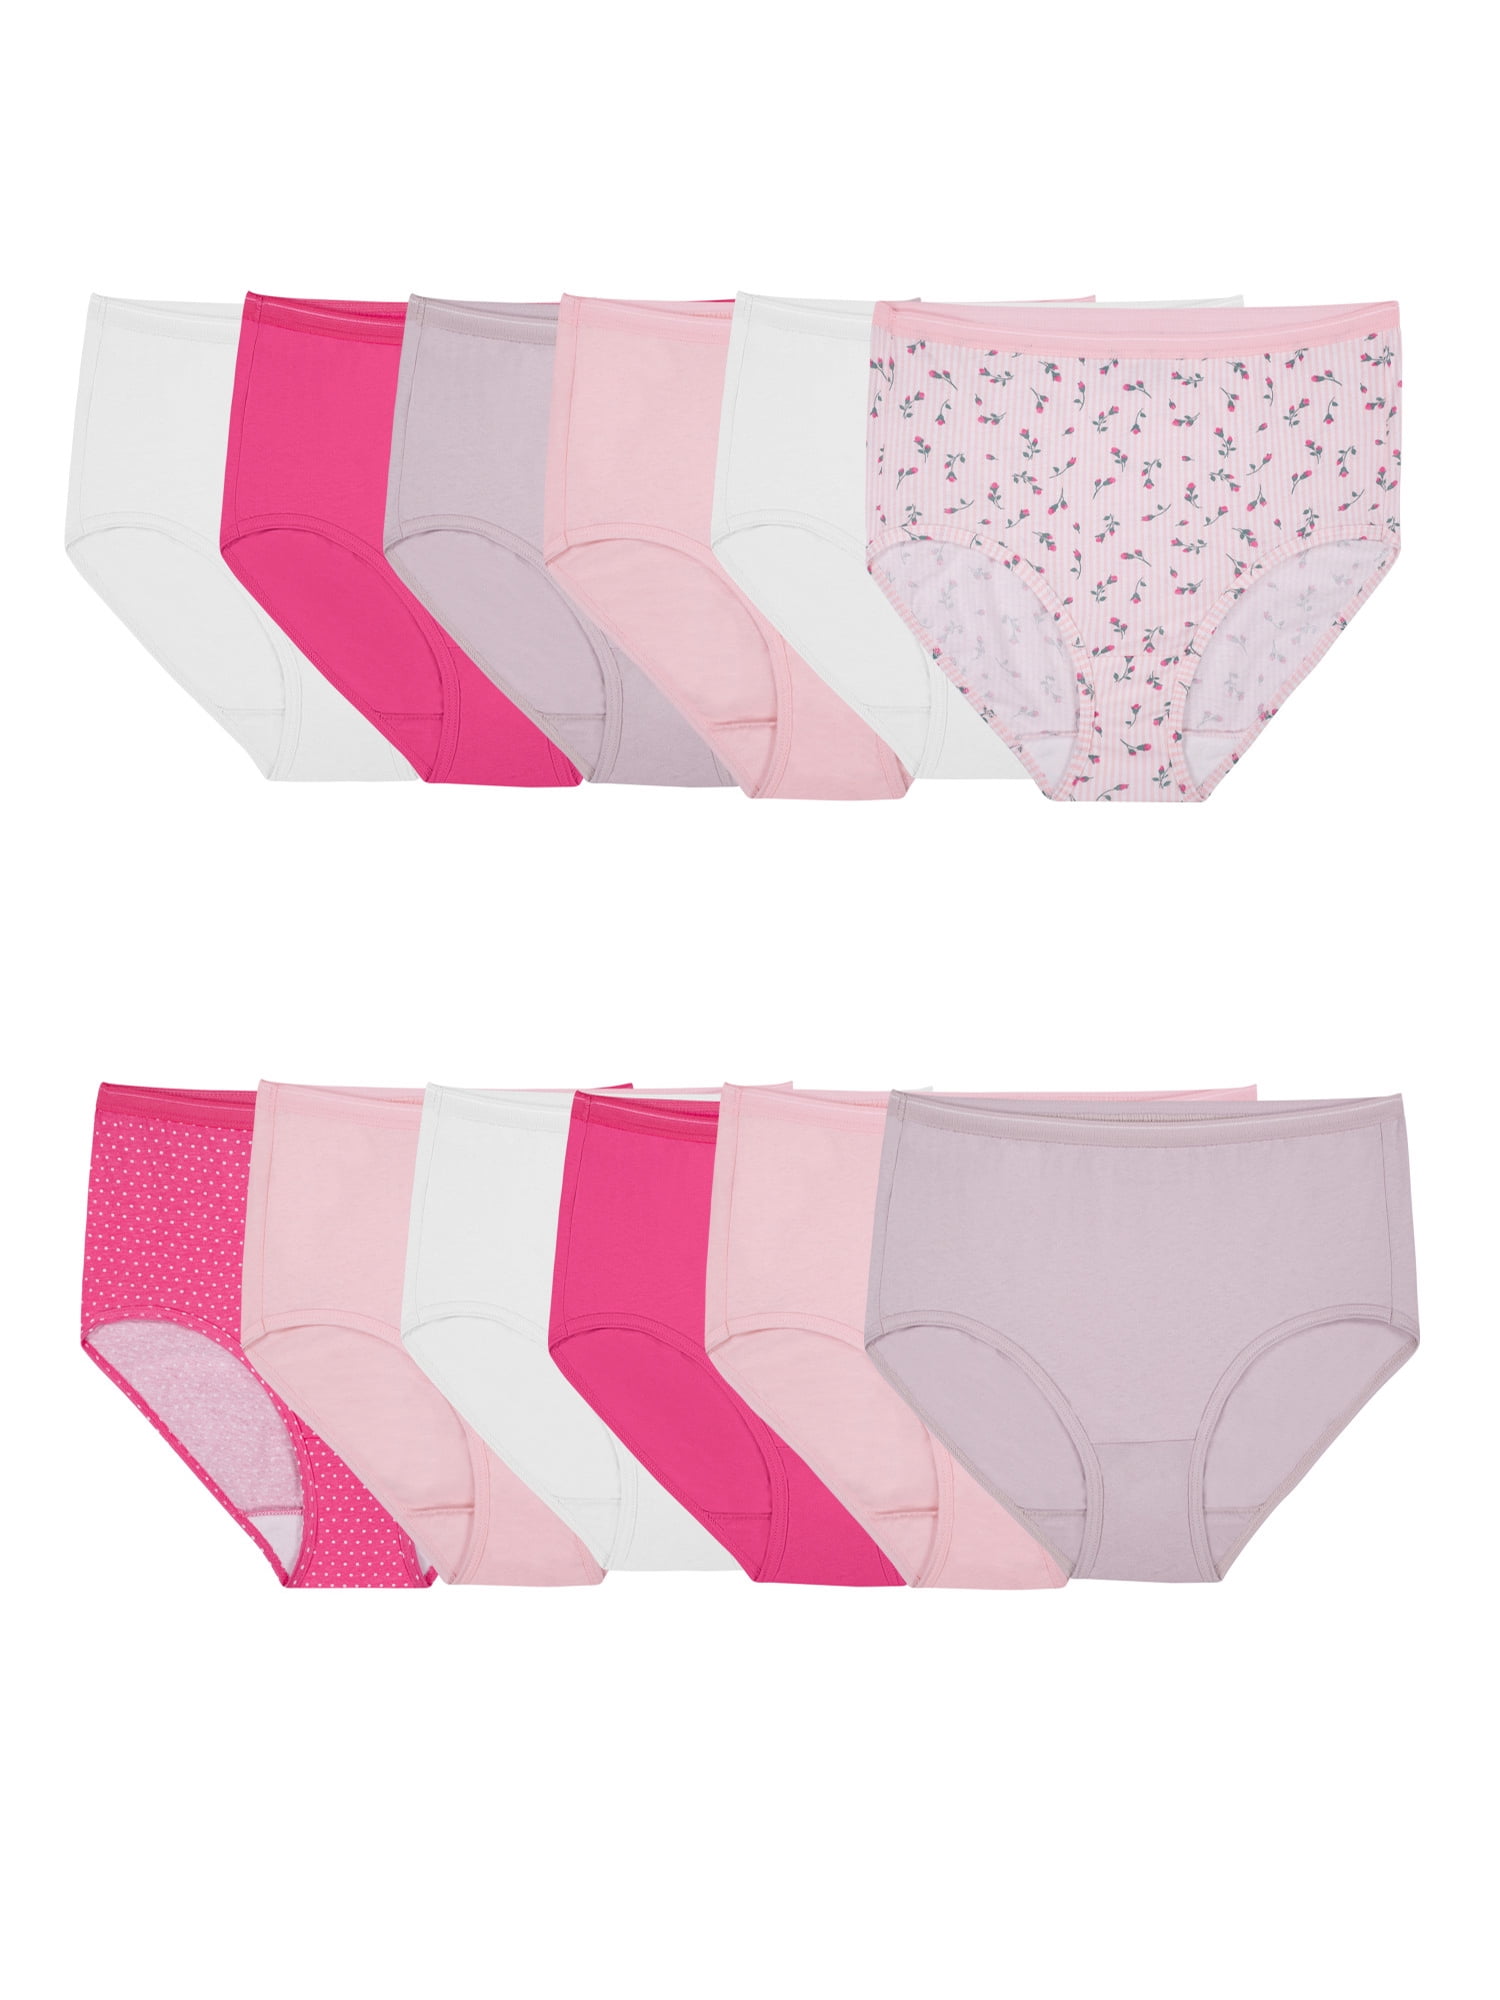 Women's underwear: Fruit of the Loom briefs, 100% cotton, Super Value 12  pack